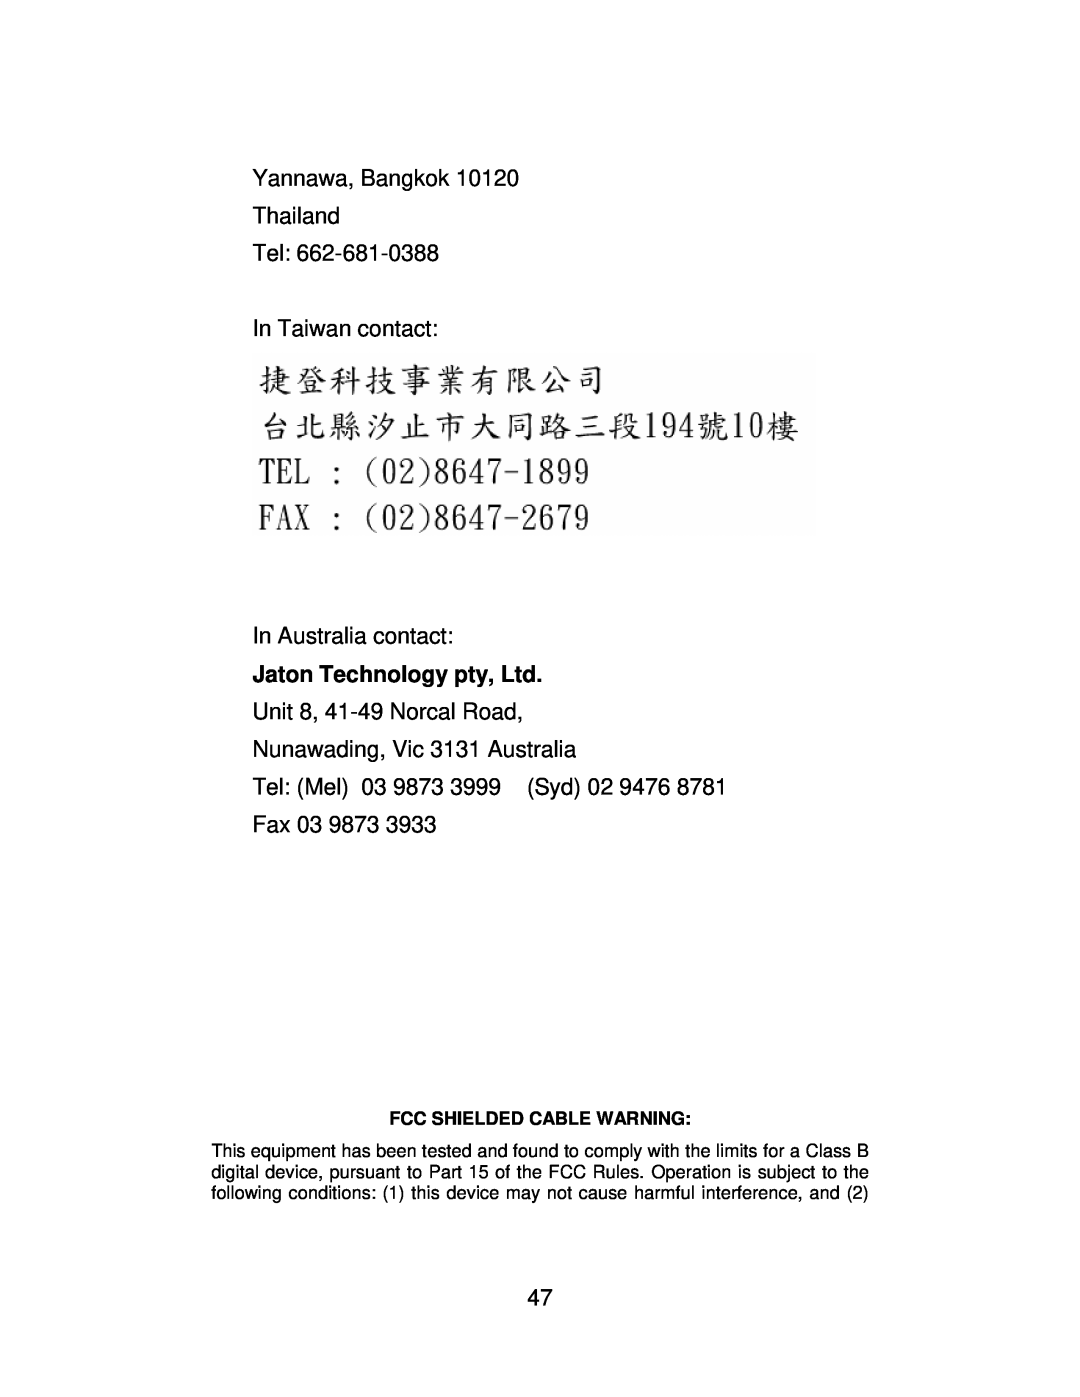 Jaton 5200 user manual Yannawa, Bangkok Thailand Tel In Taiwan contact In Australia contact, Fcc Shielded Cable Warning 